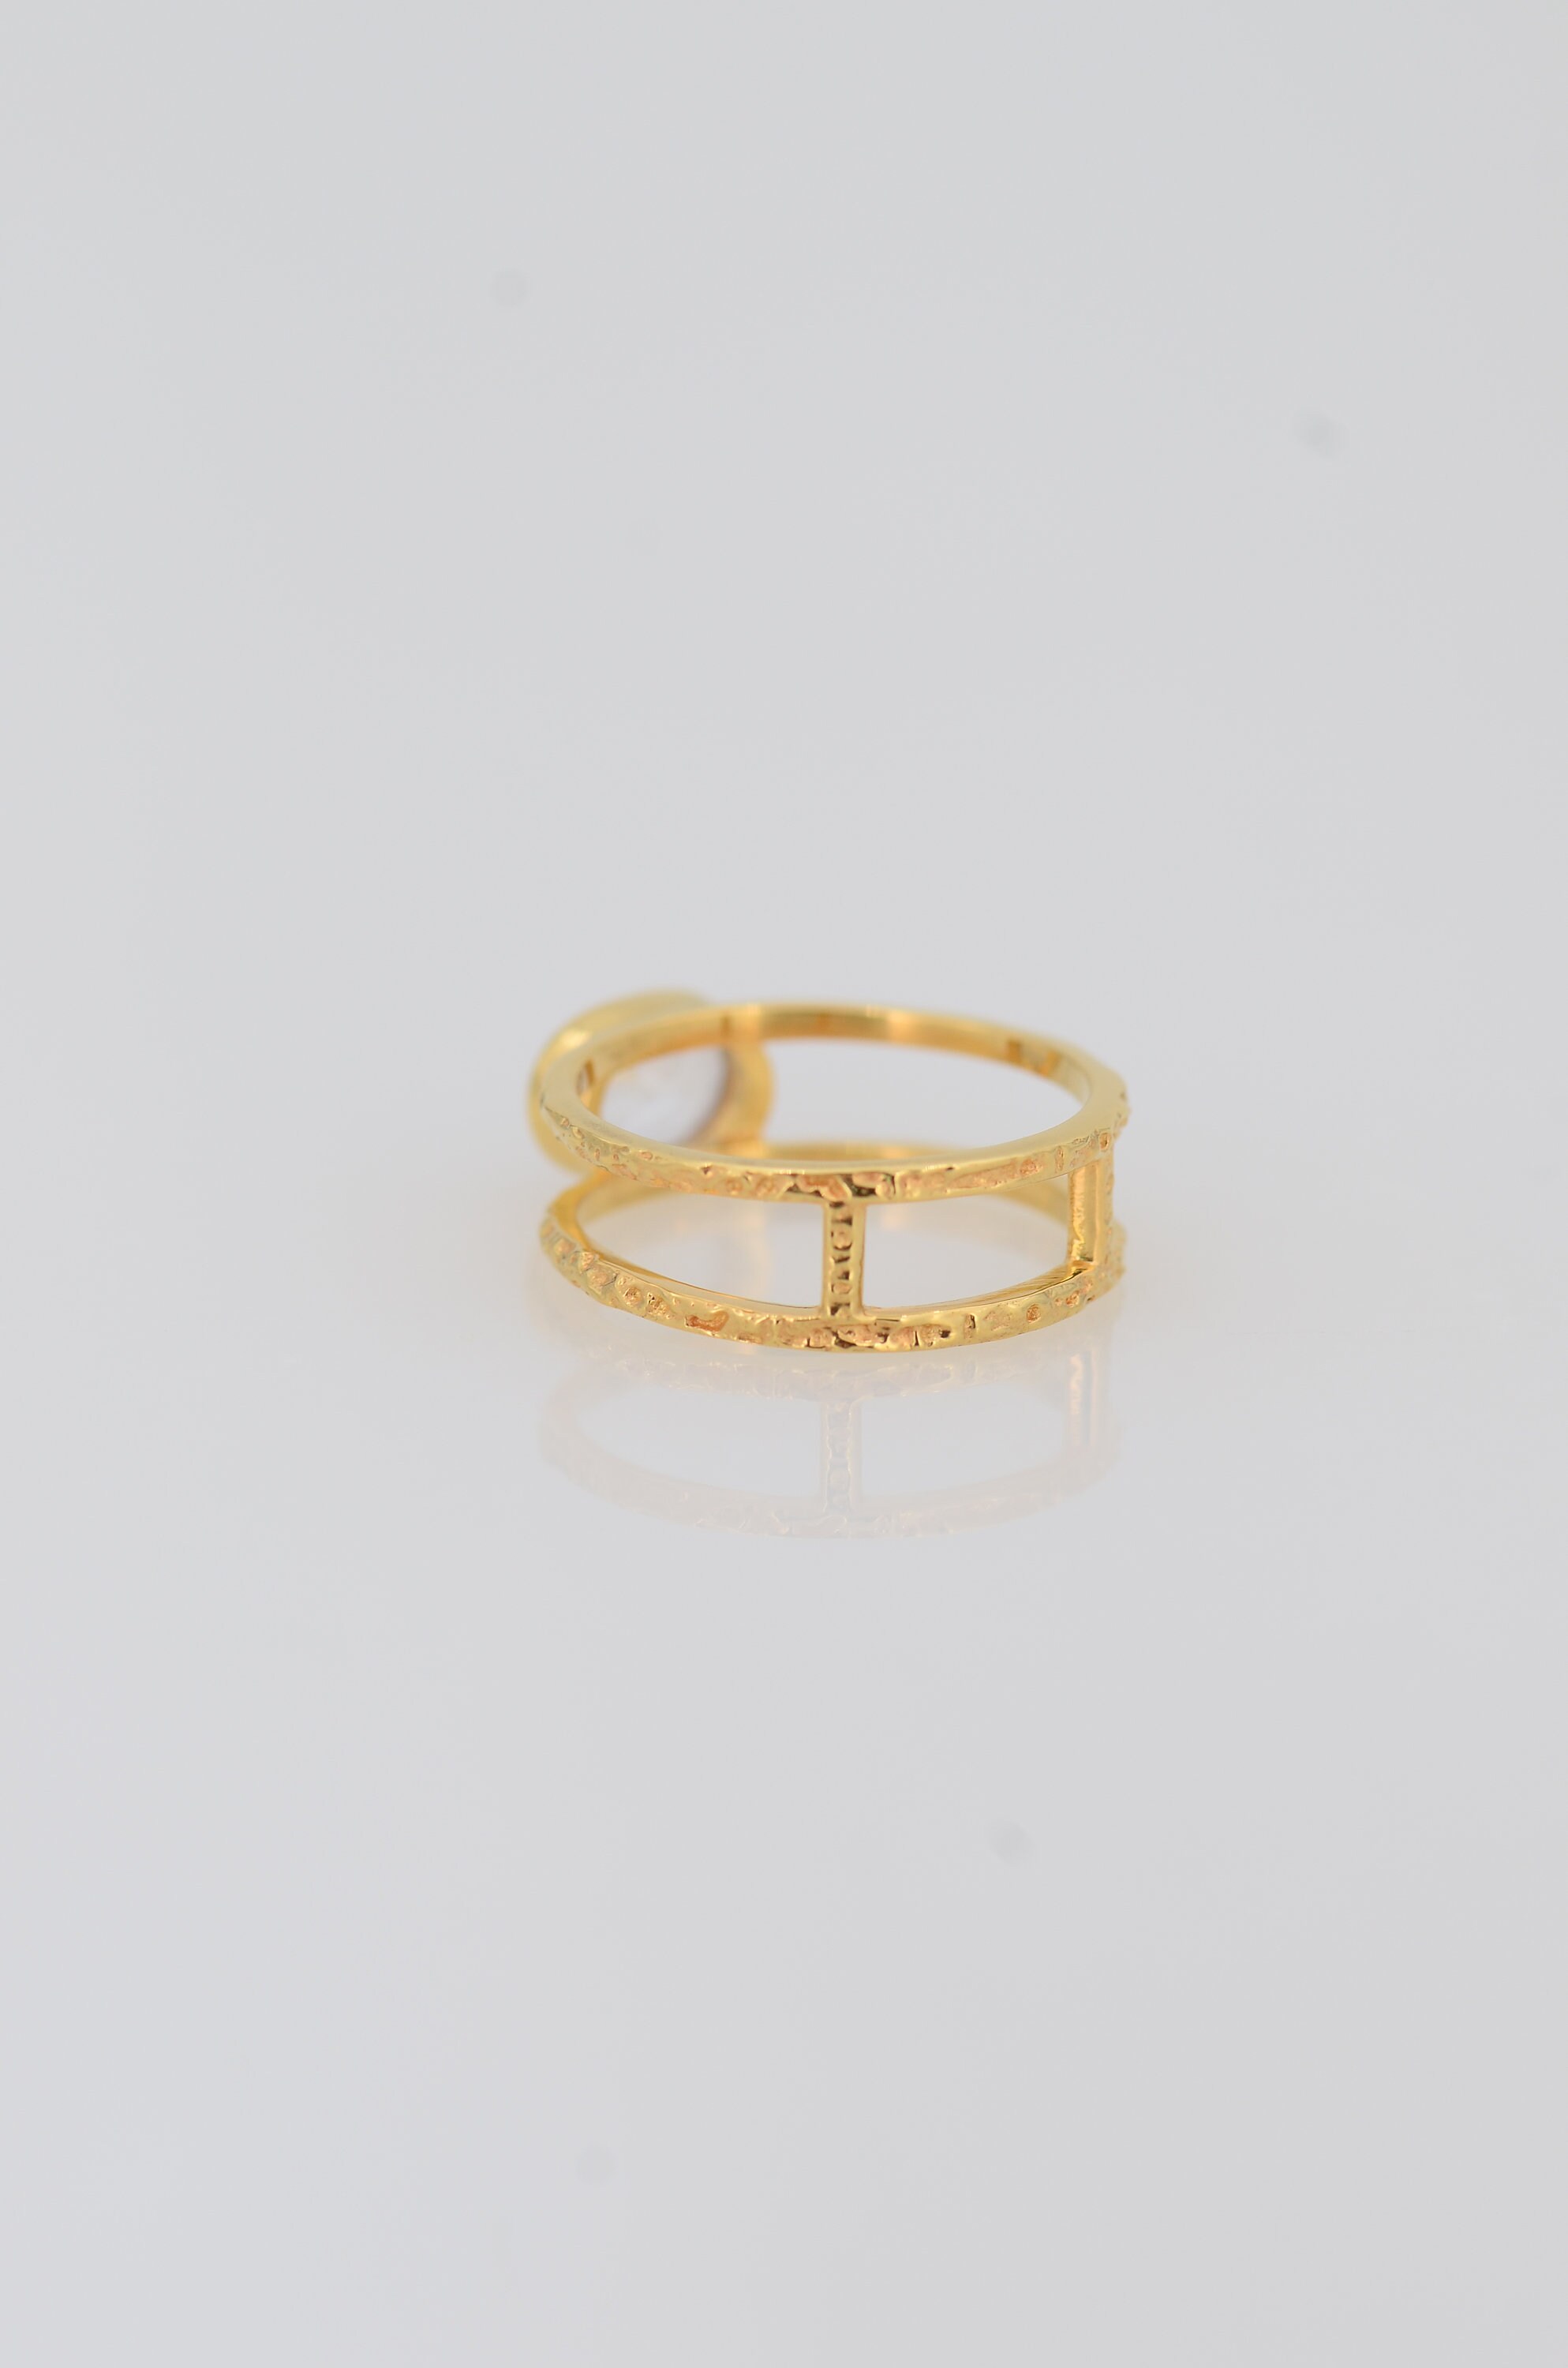 Clear Quartz ring Birthstone ring Wedding ring Crystal | Etsy